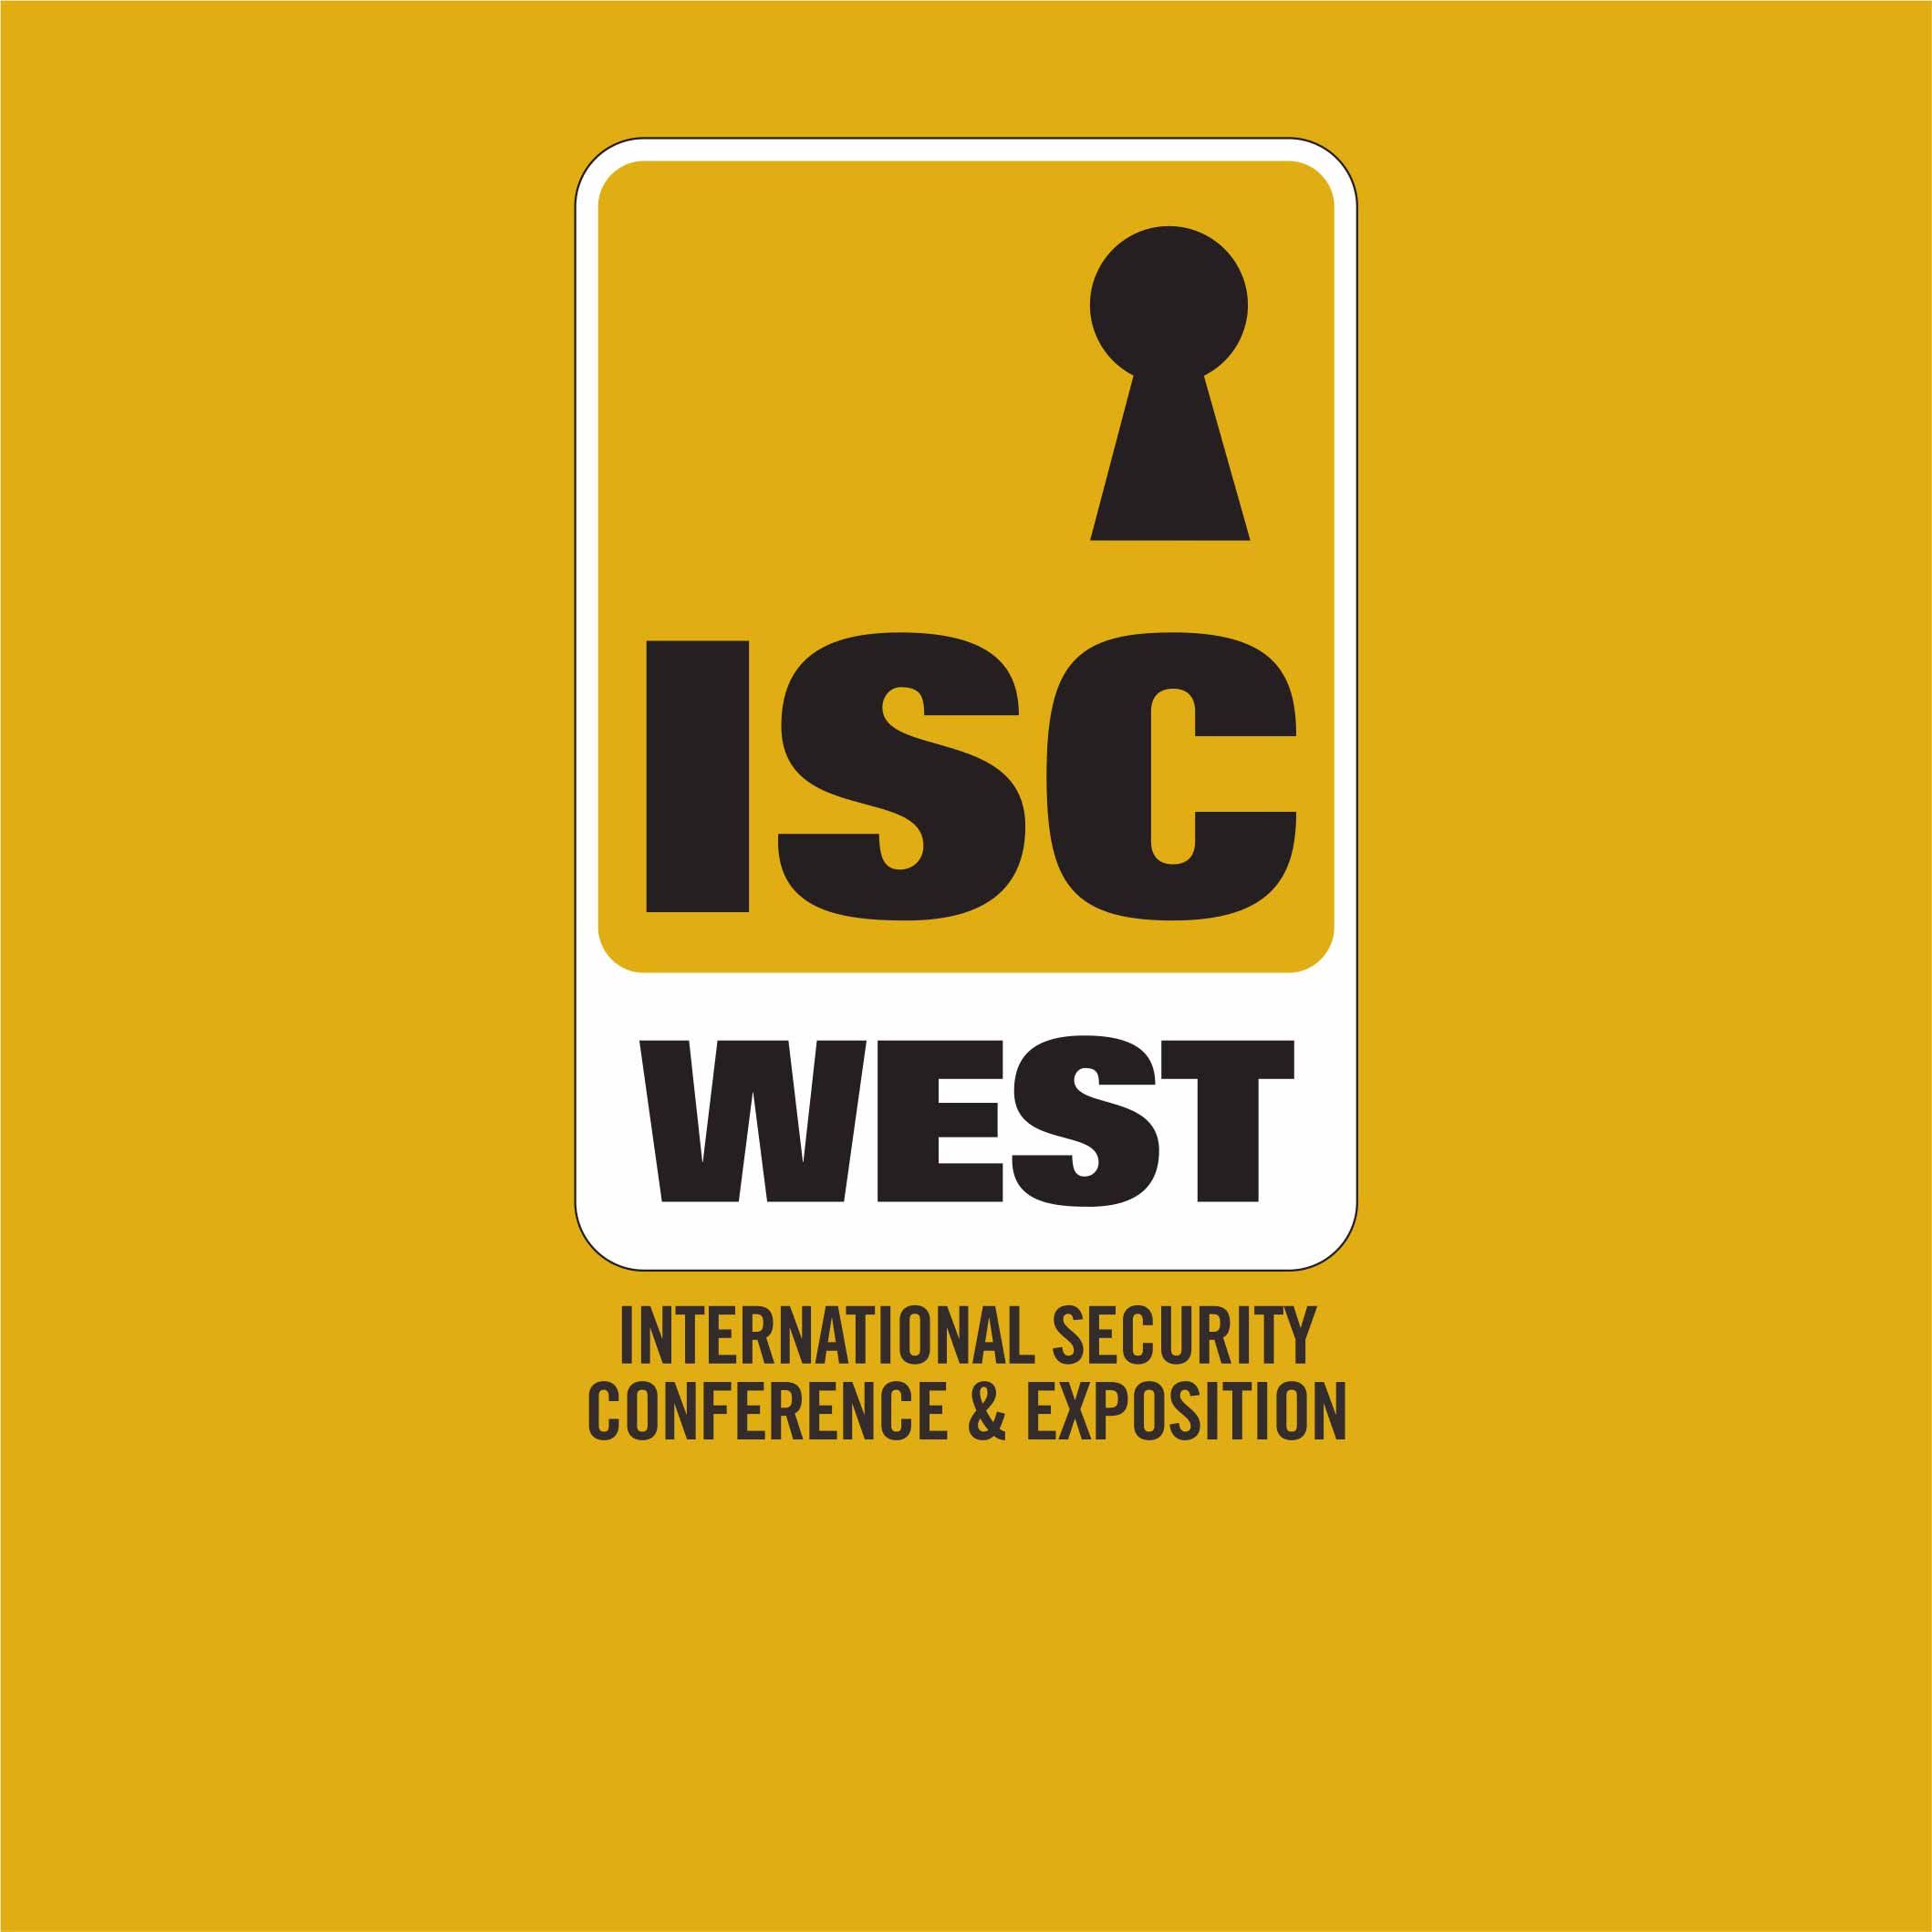 ISC WEST 2018